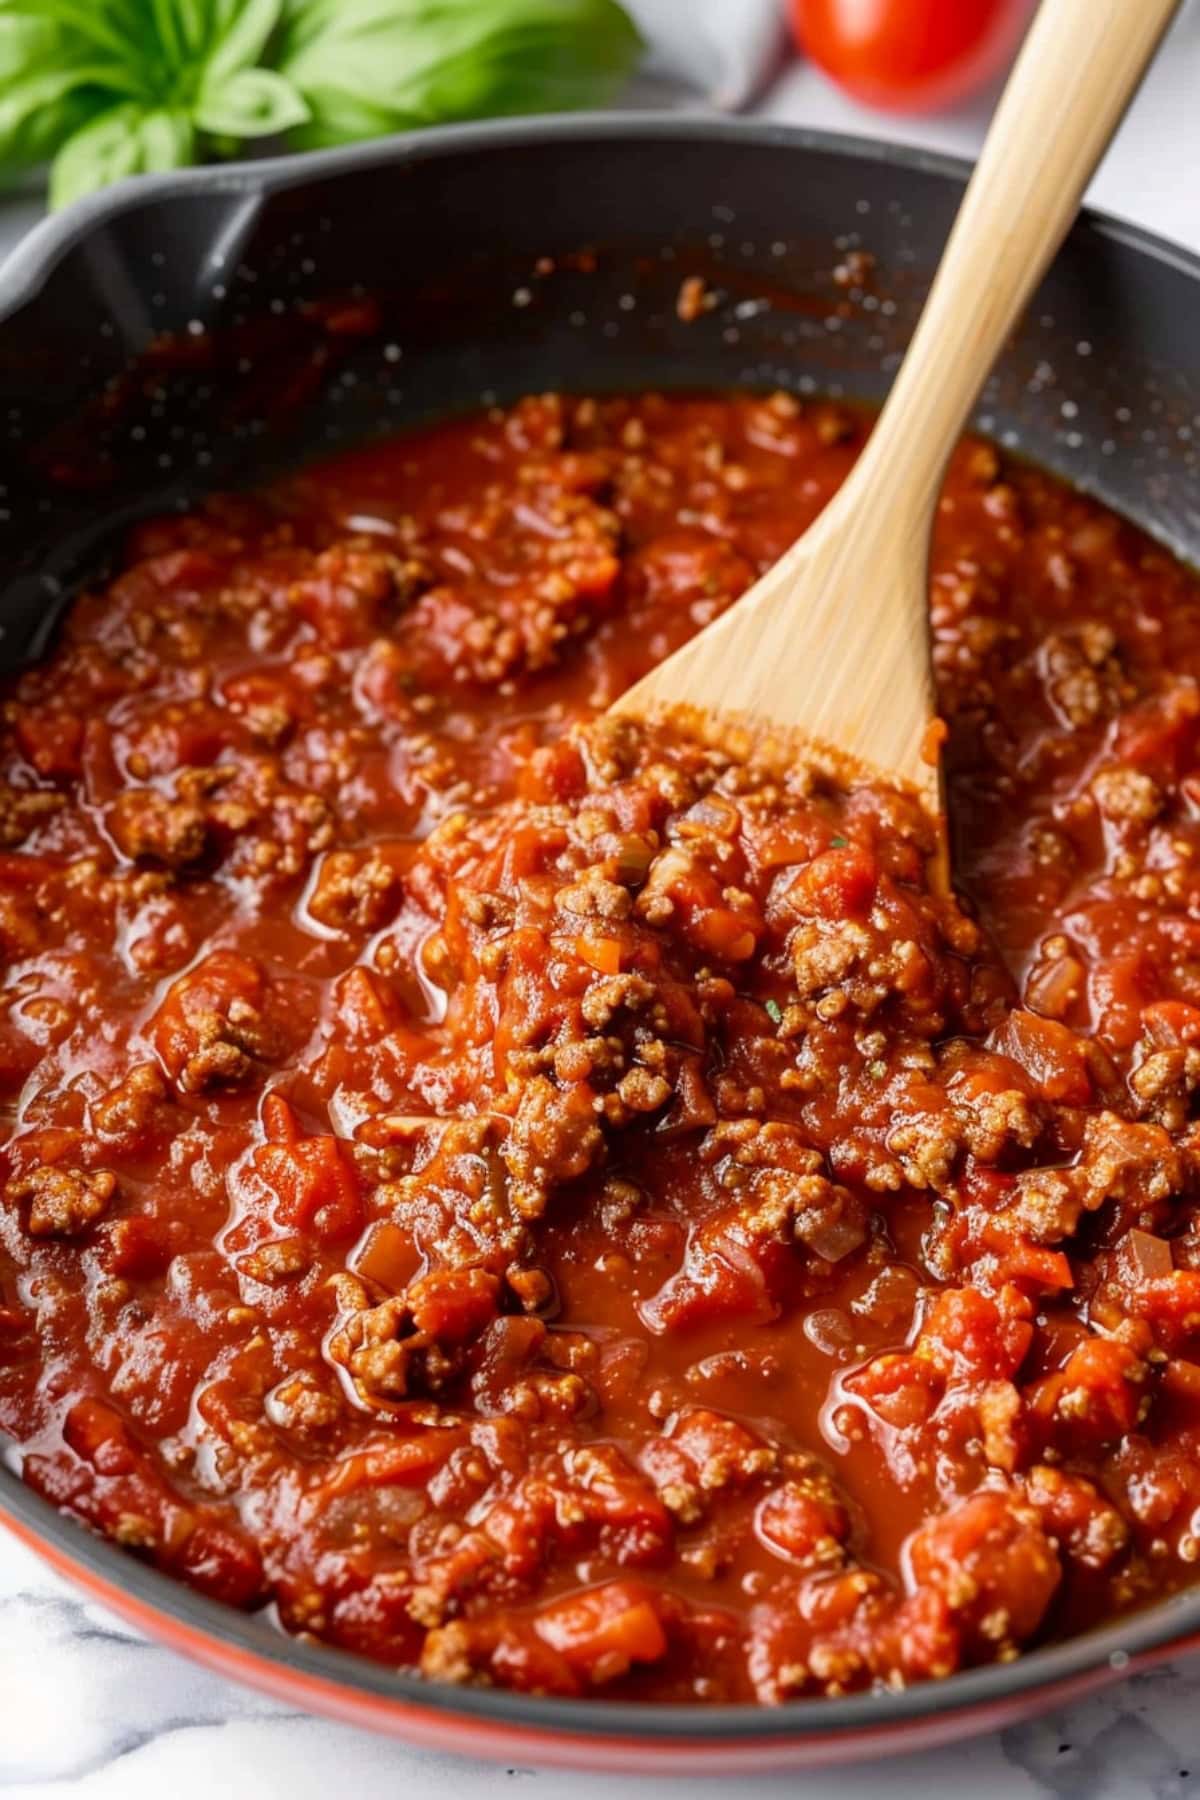 Tiktok spaghetti meat sauce in a black skillet.